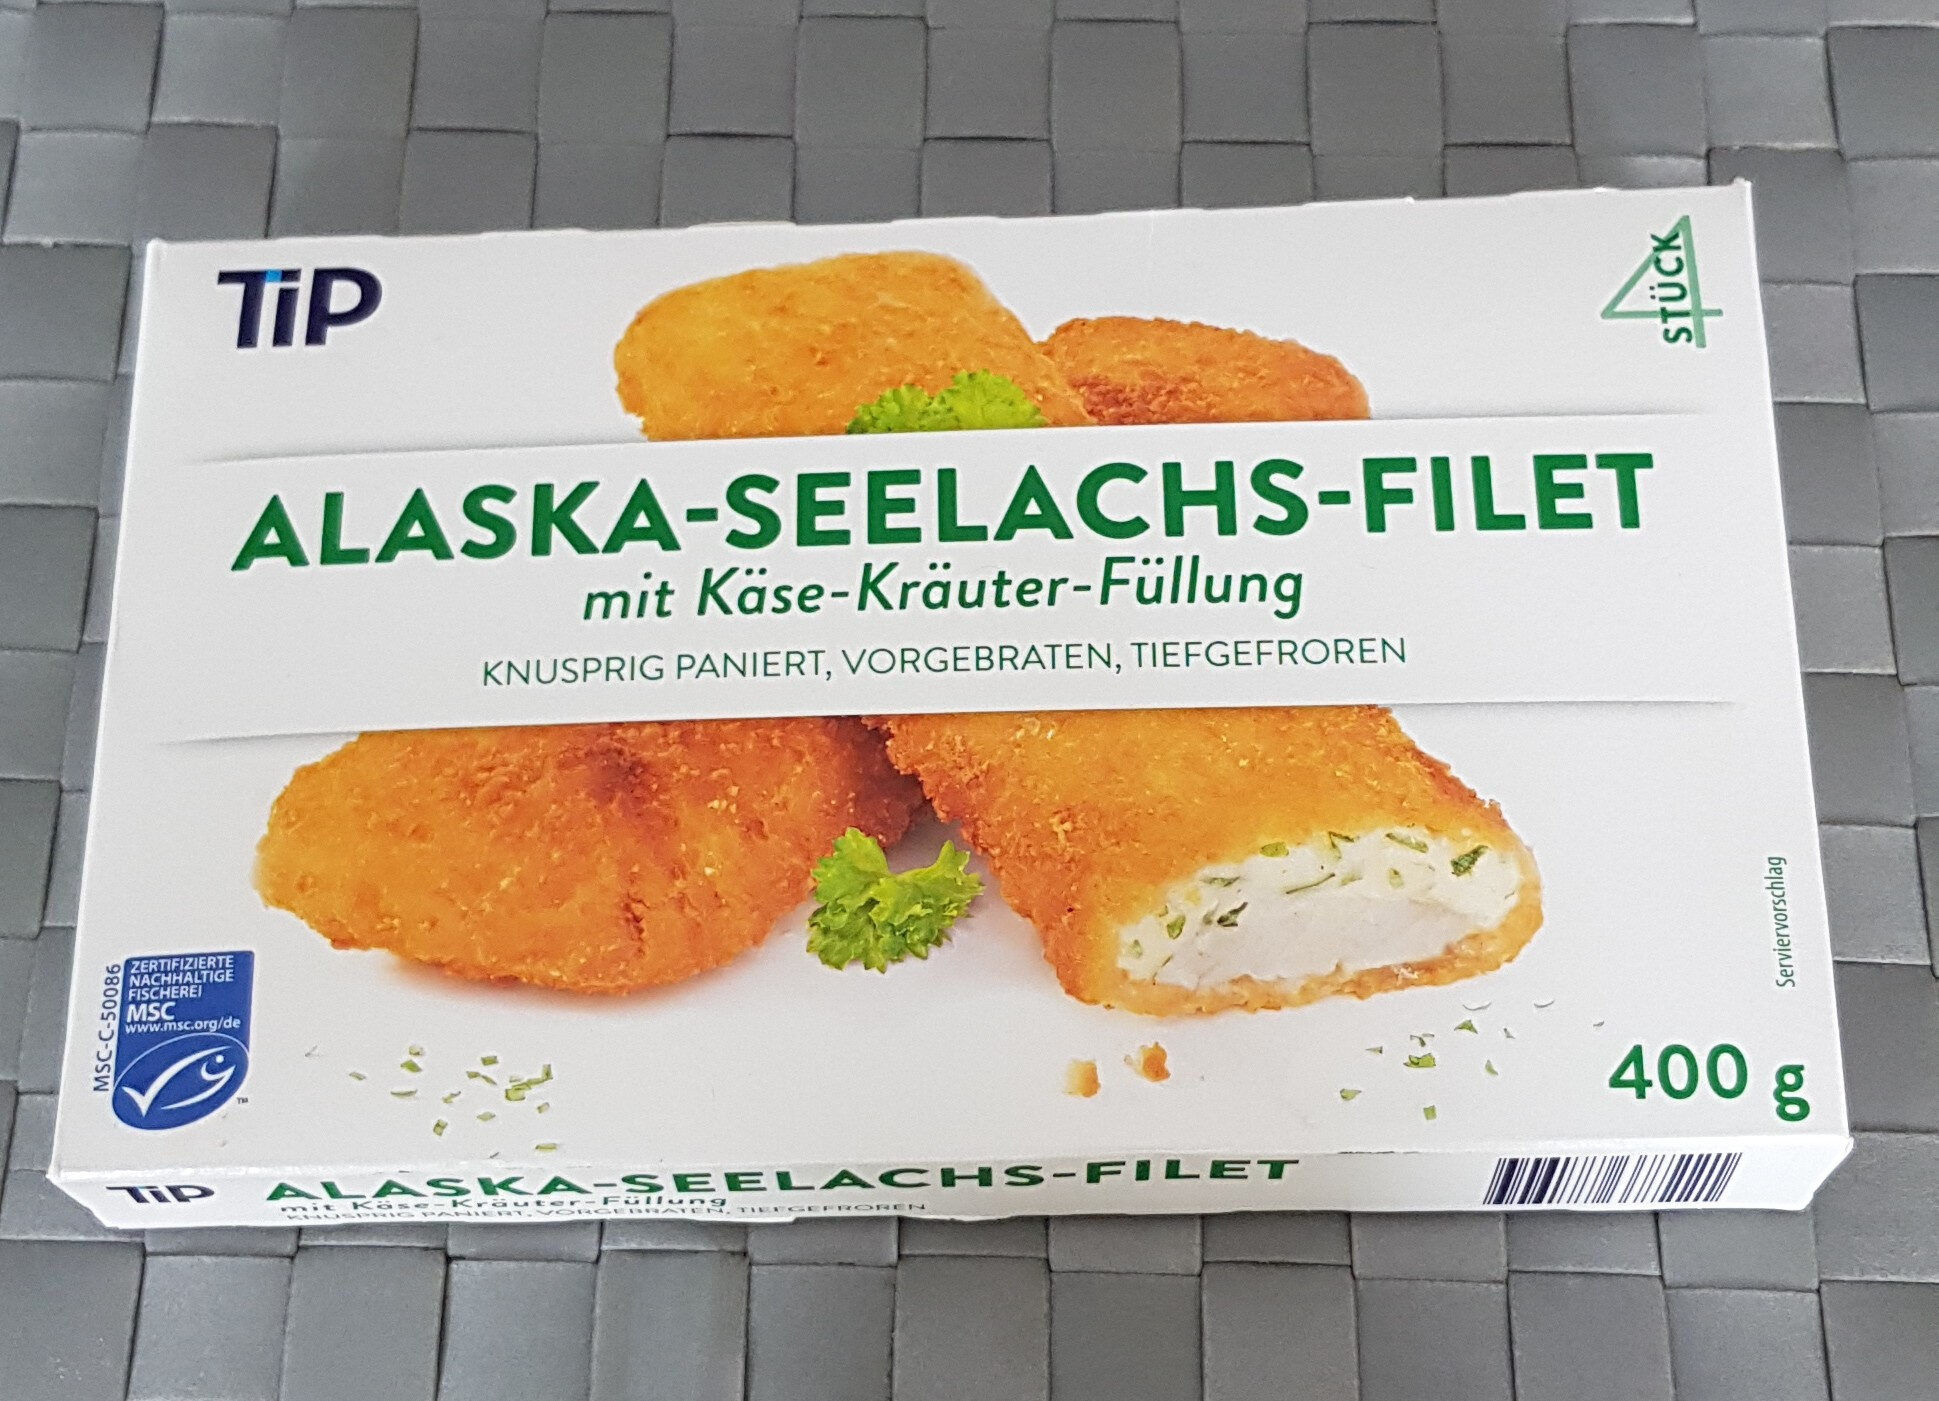 Alaska-Seelachs-Filet mit Käse-Kräuter-Füllung - Product - de